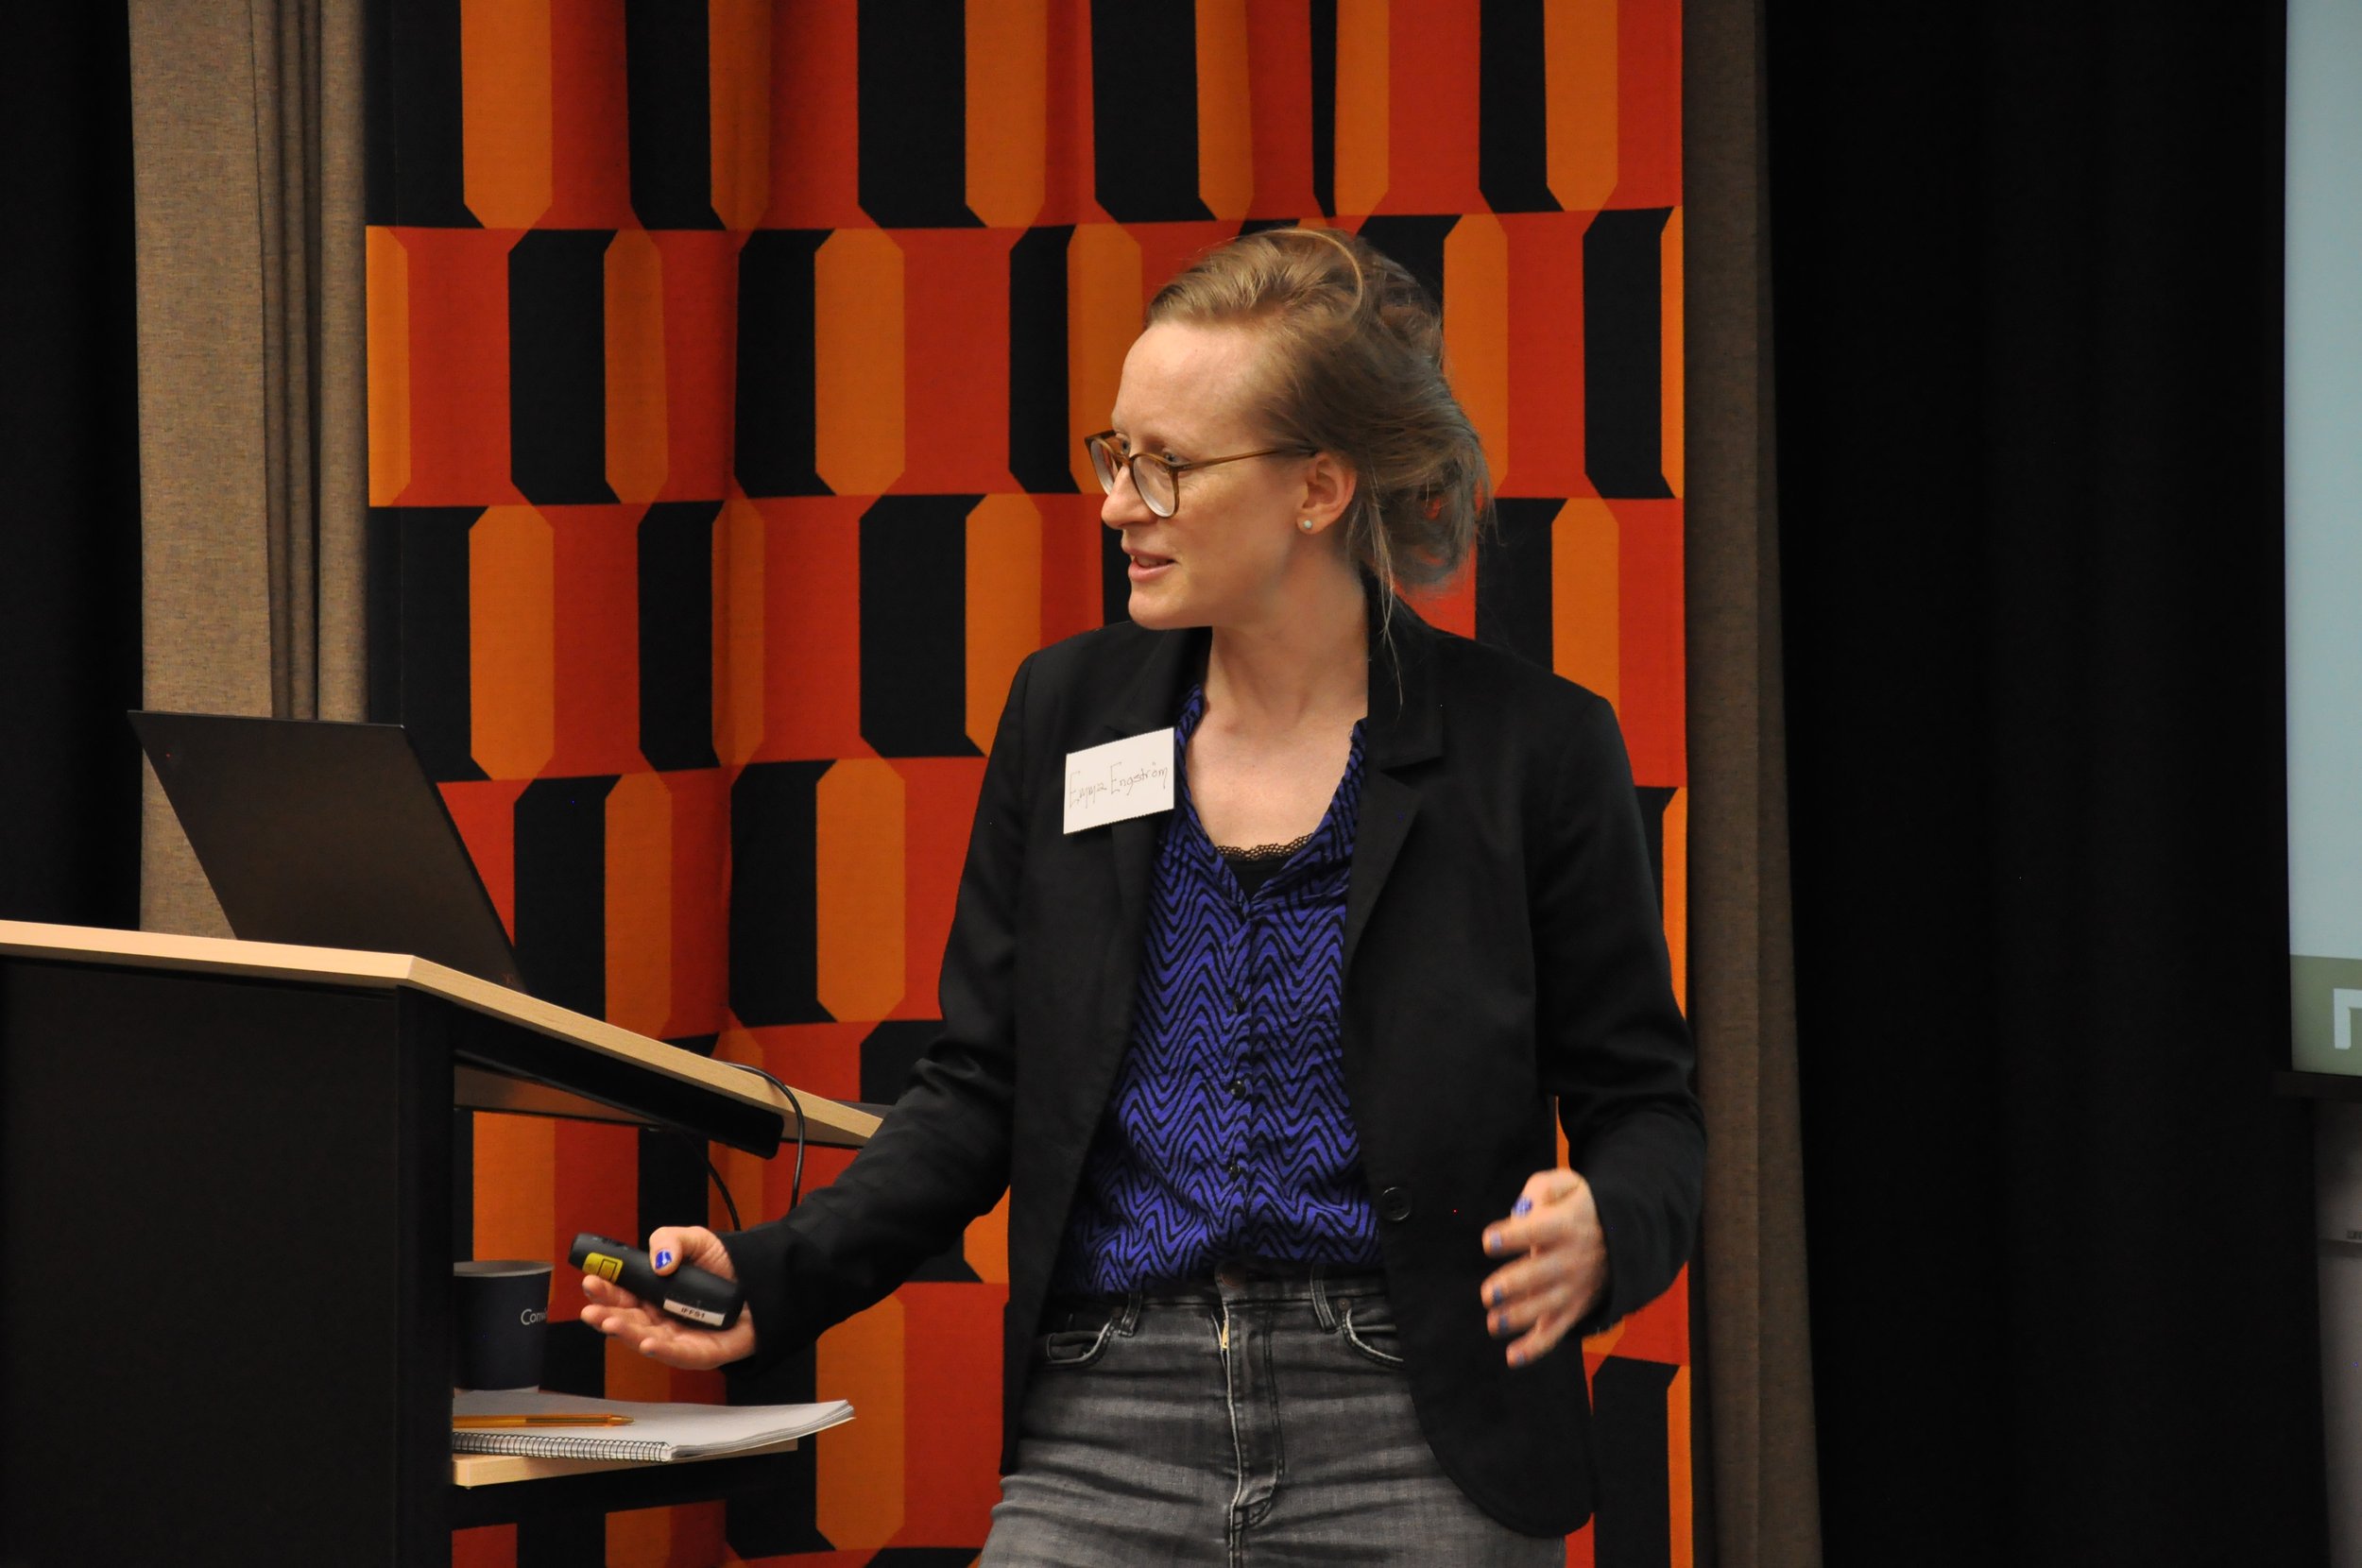   Emma Engström  gave the presentation “The prospect for data-driven assessments of slow global catastrophic risks” 